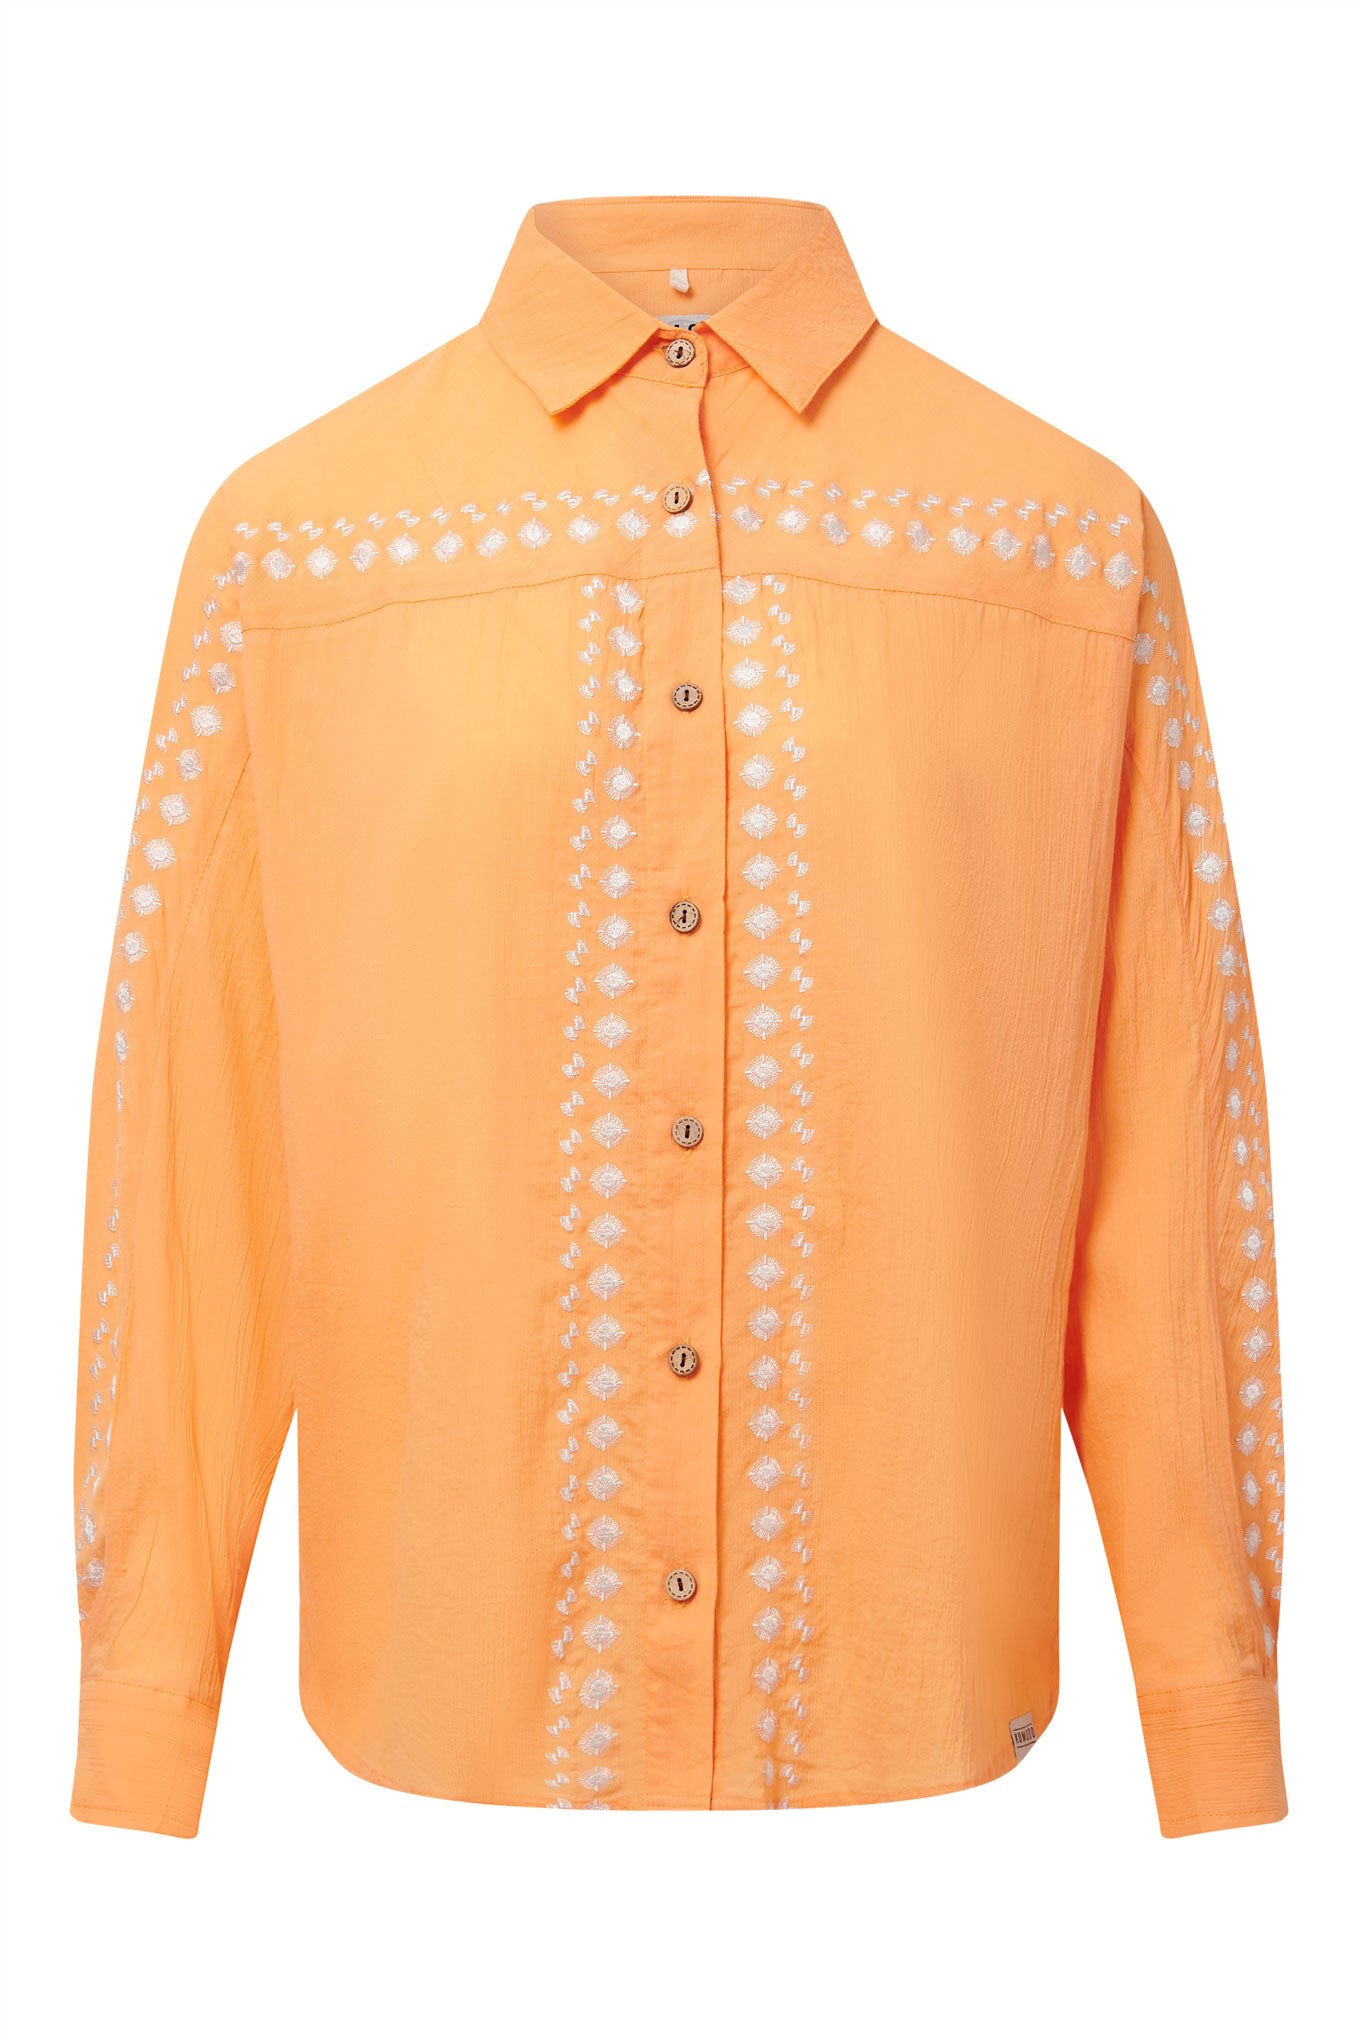 Komodo Women's Yellow / Orange Hanako - Organic Cotton Embroidery Shirt Cantaloupe